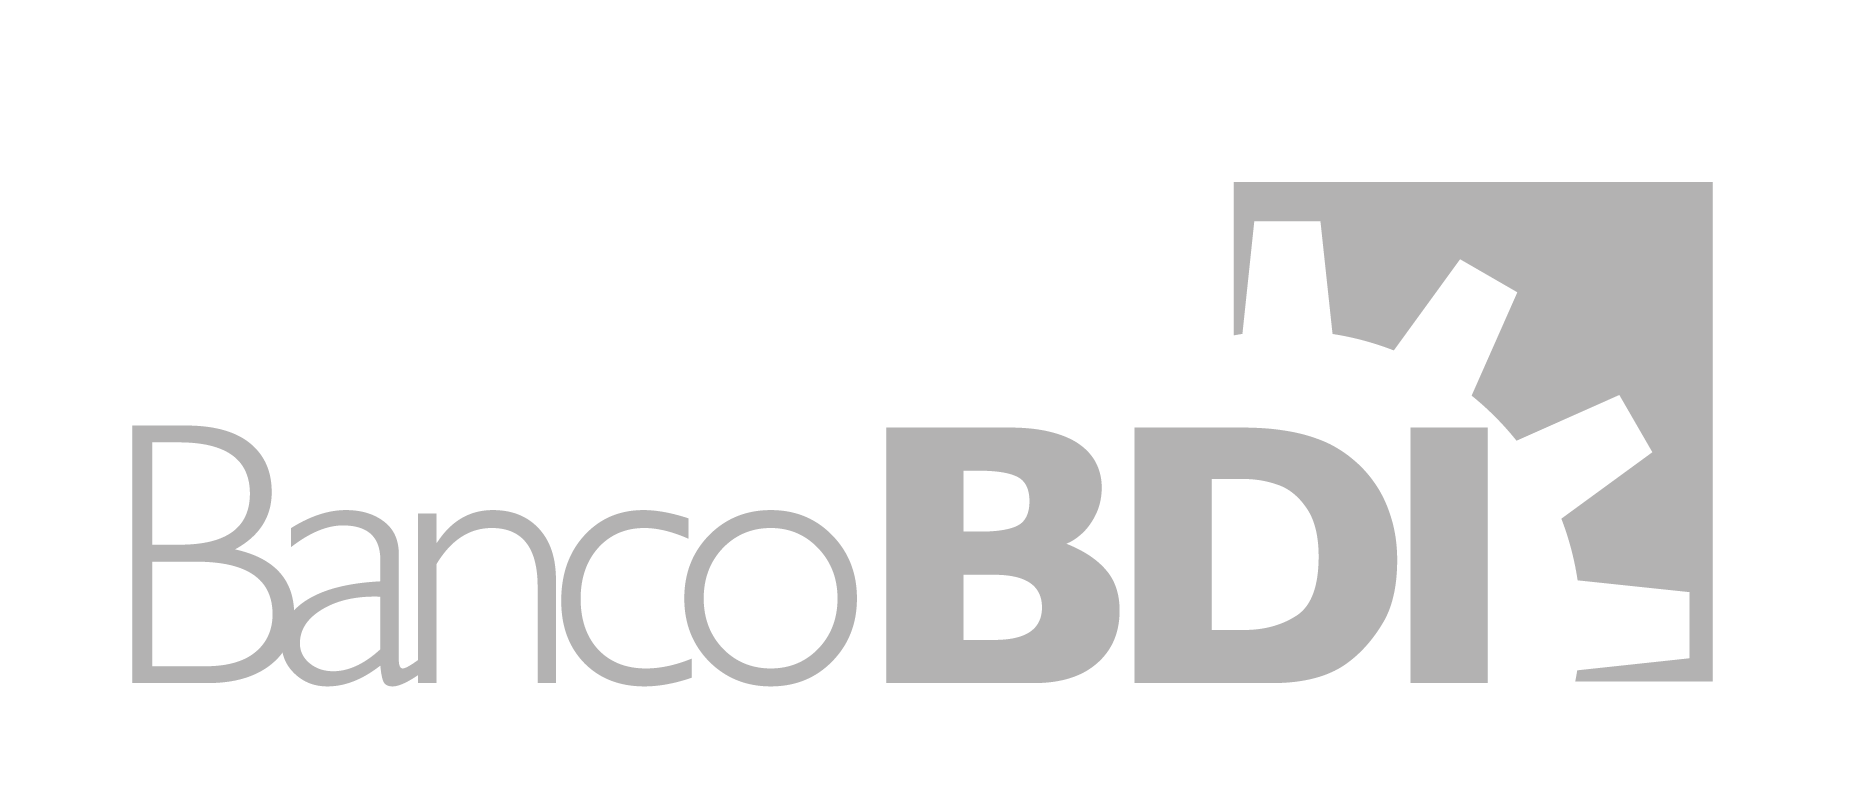 Partners - image Banco-BDI on https://gcs-international.com